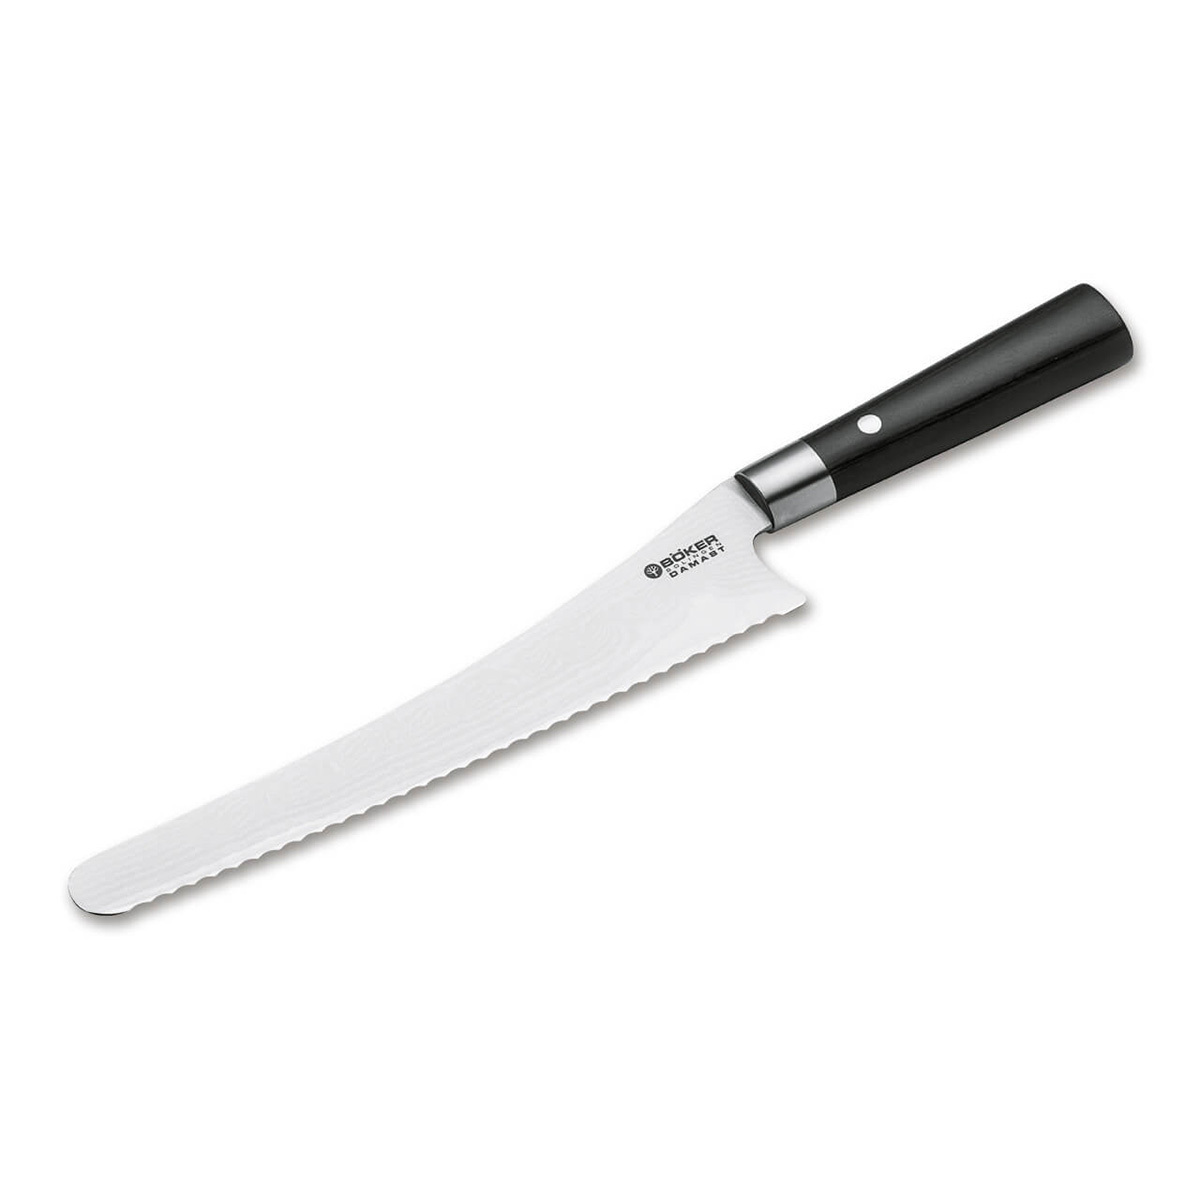 Кухонный нож Boker Damascus Black Bread Knife, сталь дамаск, рукоять дерево